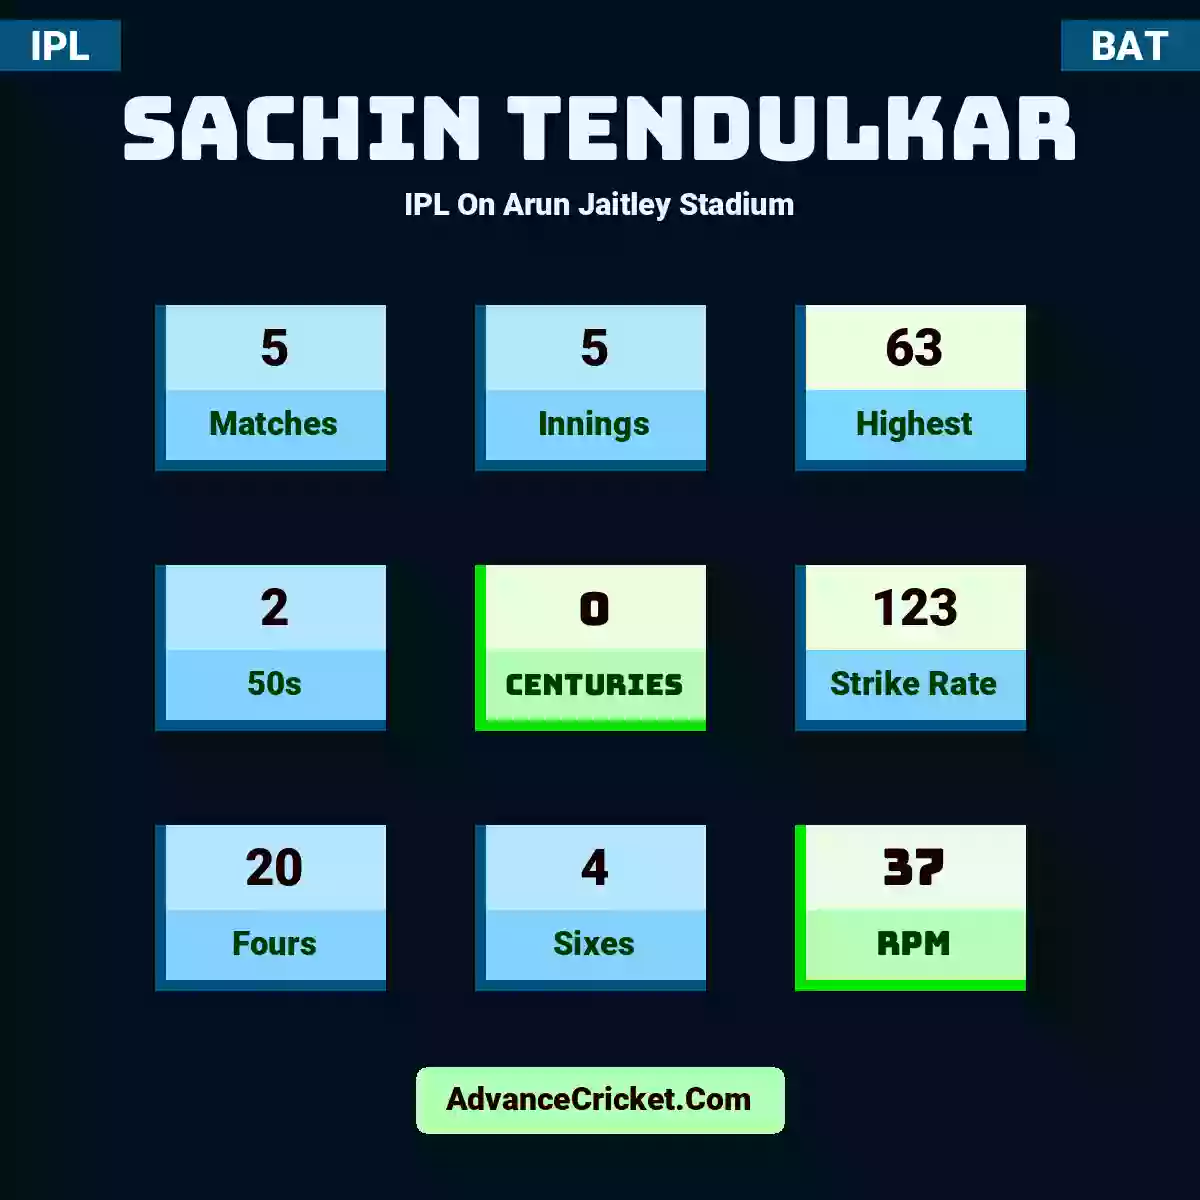 Sachin Tendulkar IPL  On Arun Jaitley Stadium, Sachin Tendulkar played 5 matches, scored 63 runs as highest, 2 half-centuries, and 0 centuries, with a strike rate of 123. S.Tendulkar hit 20 fours and 4 sixes, with an RPM of 37.